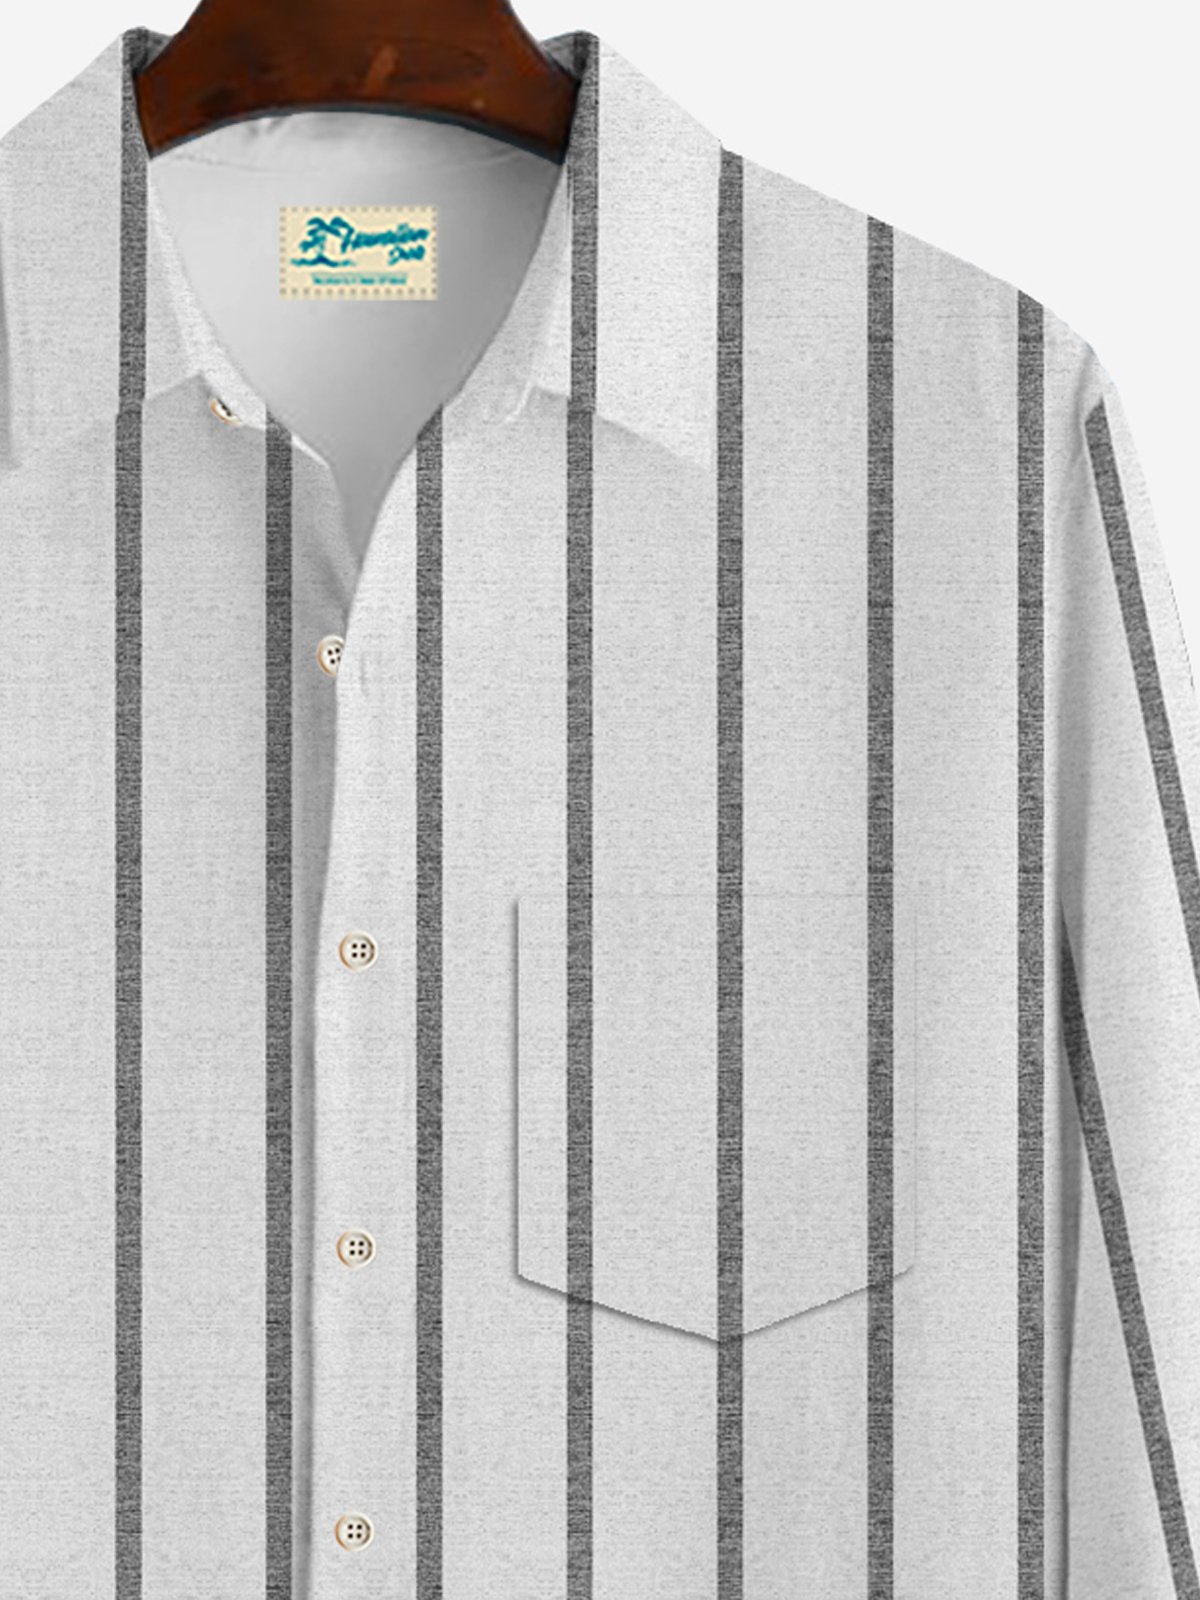 JoyMitty Basic Natural Fiber Striped Print Men's Button Down Pocket Long Sleeve Shirt